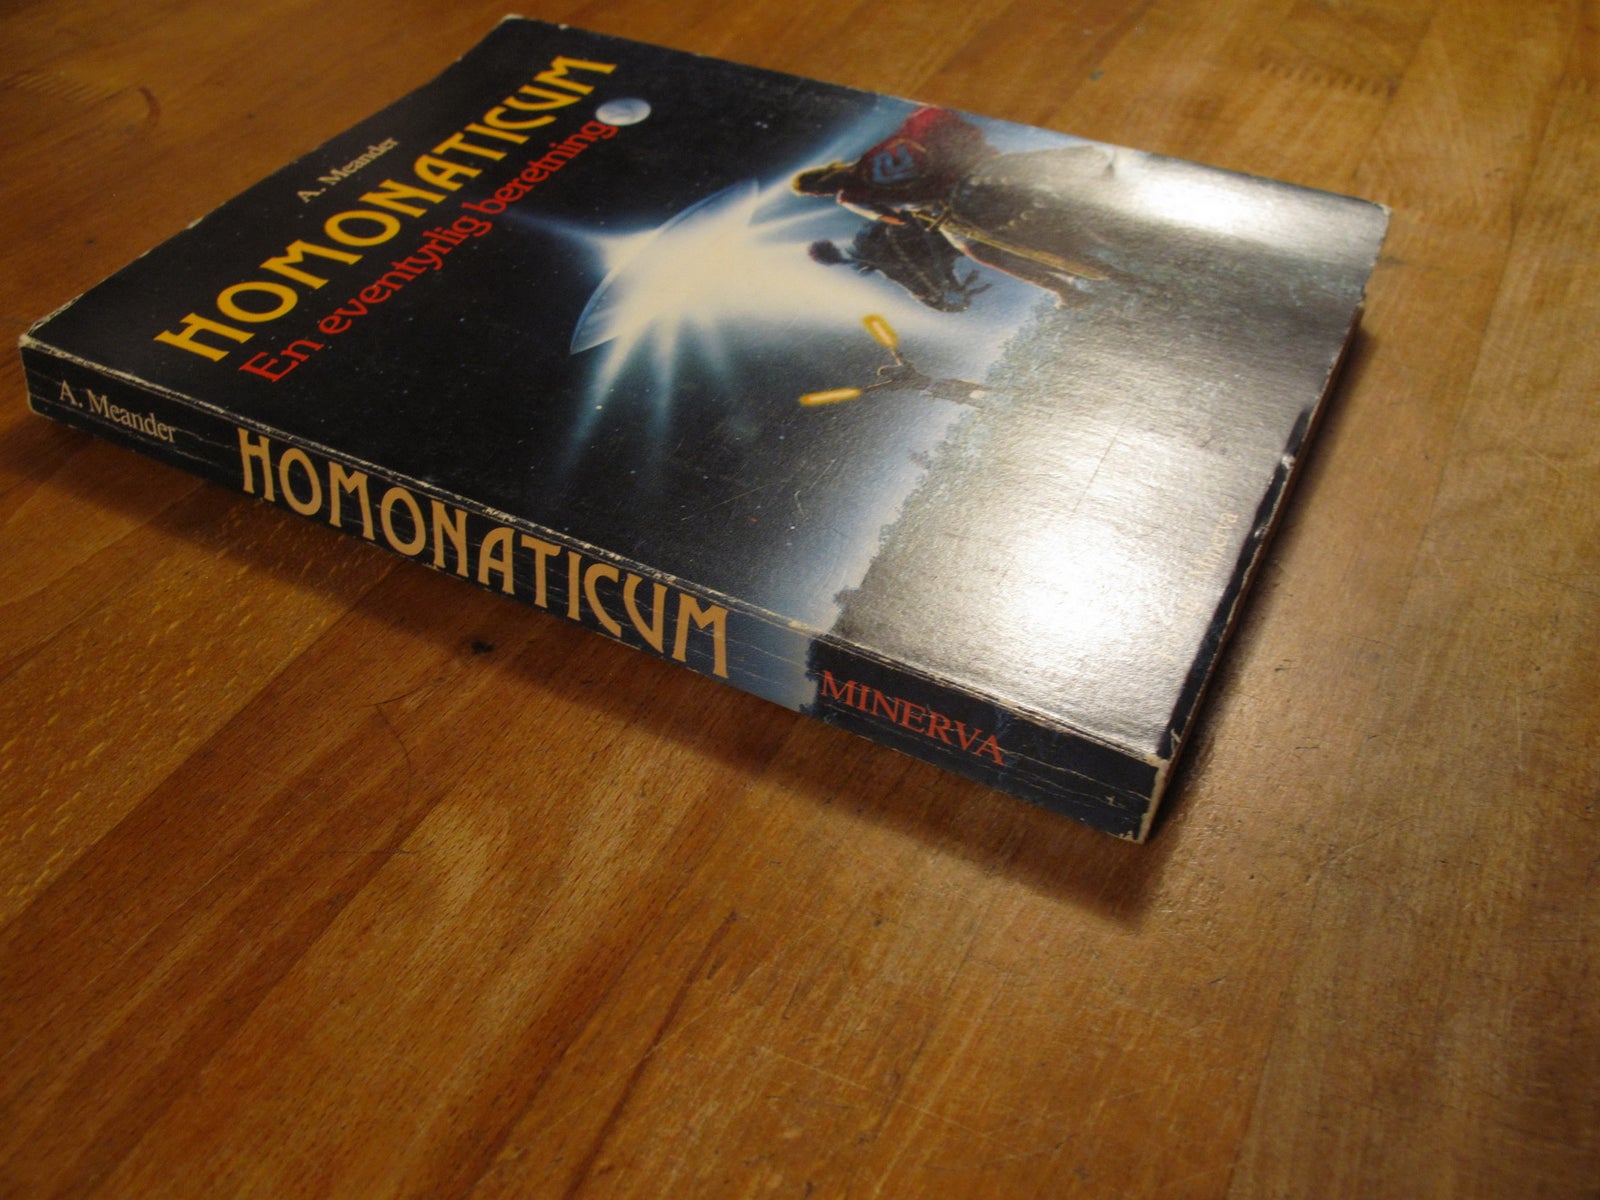 Homonaticum - En eventyrlig beretning (1982), Arne